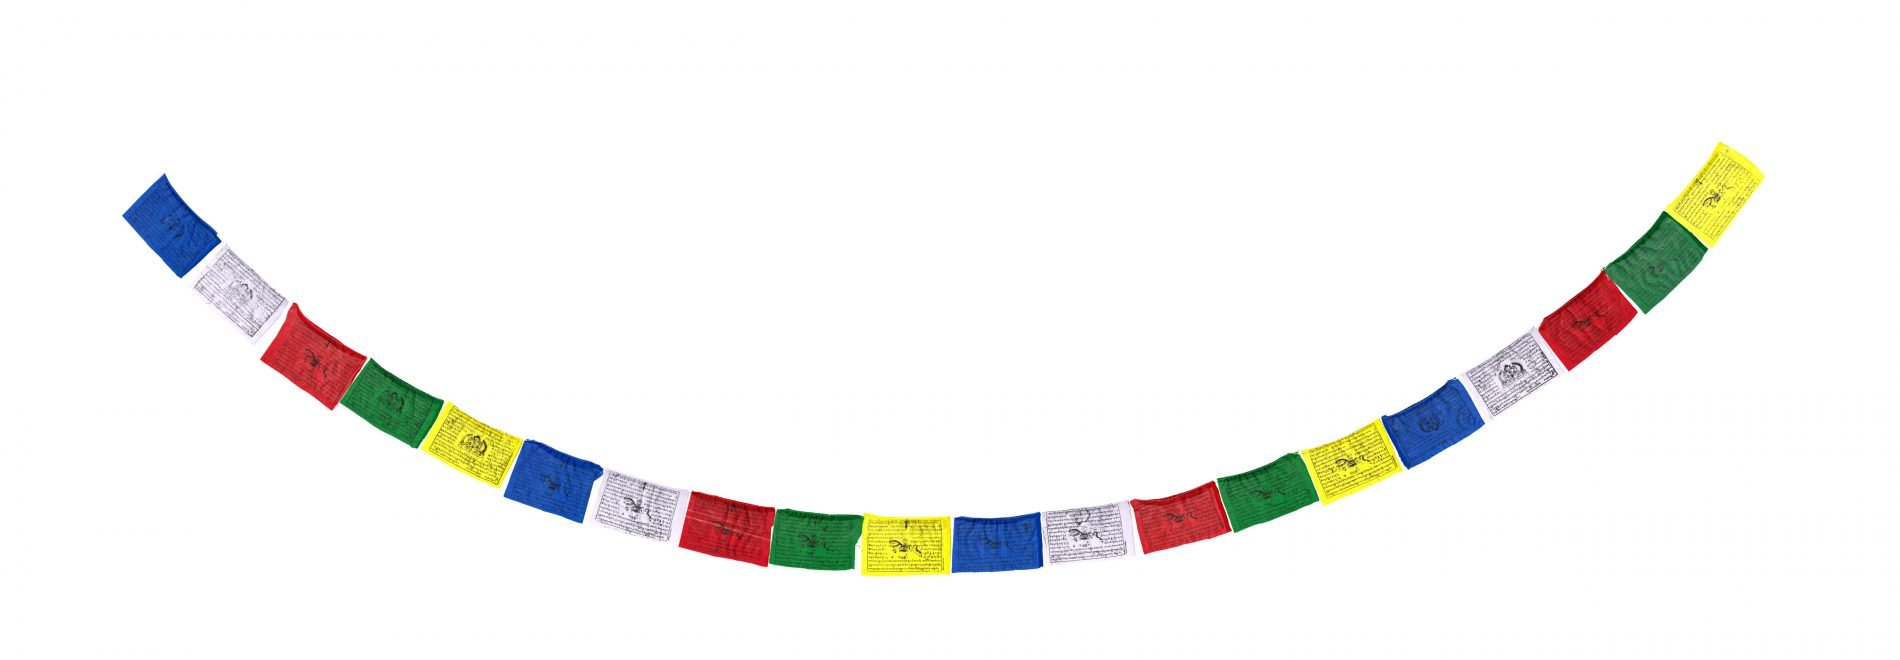 Buddhismus Gebetsfahnen Prayer Flags Tibet Nepal ca 8m Lang 25 Fahnen Windpferd 